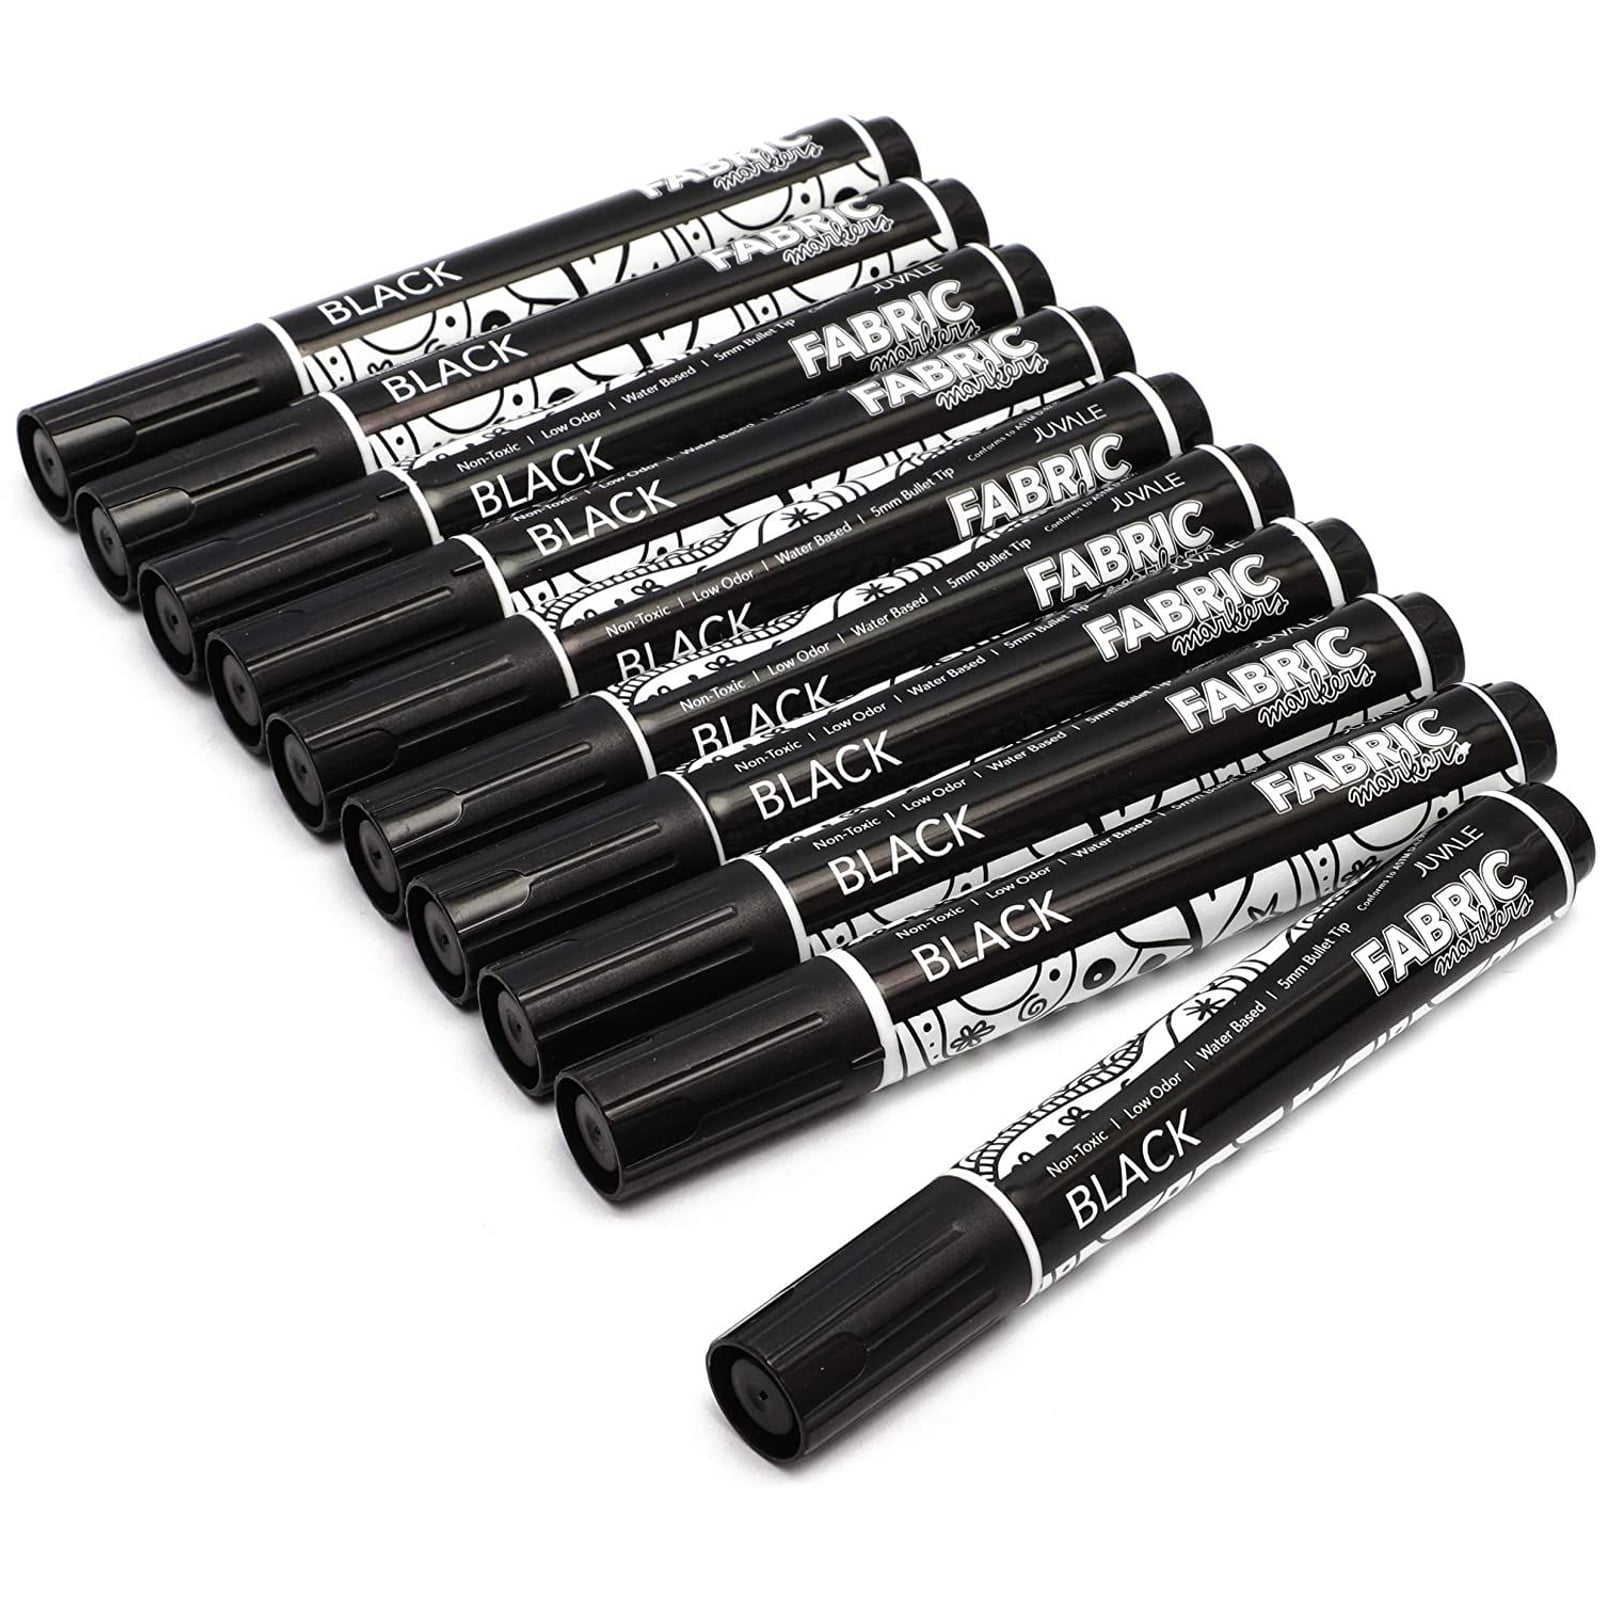 10 x Black PERMANENT Marker Pens Bullet Tip Waterproof Water Resistant Pen 